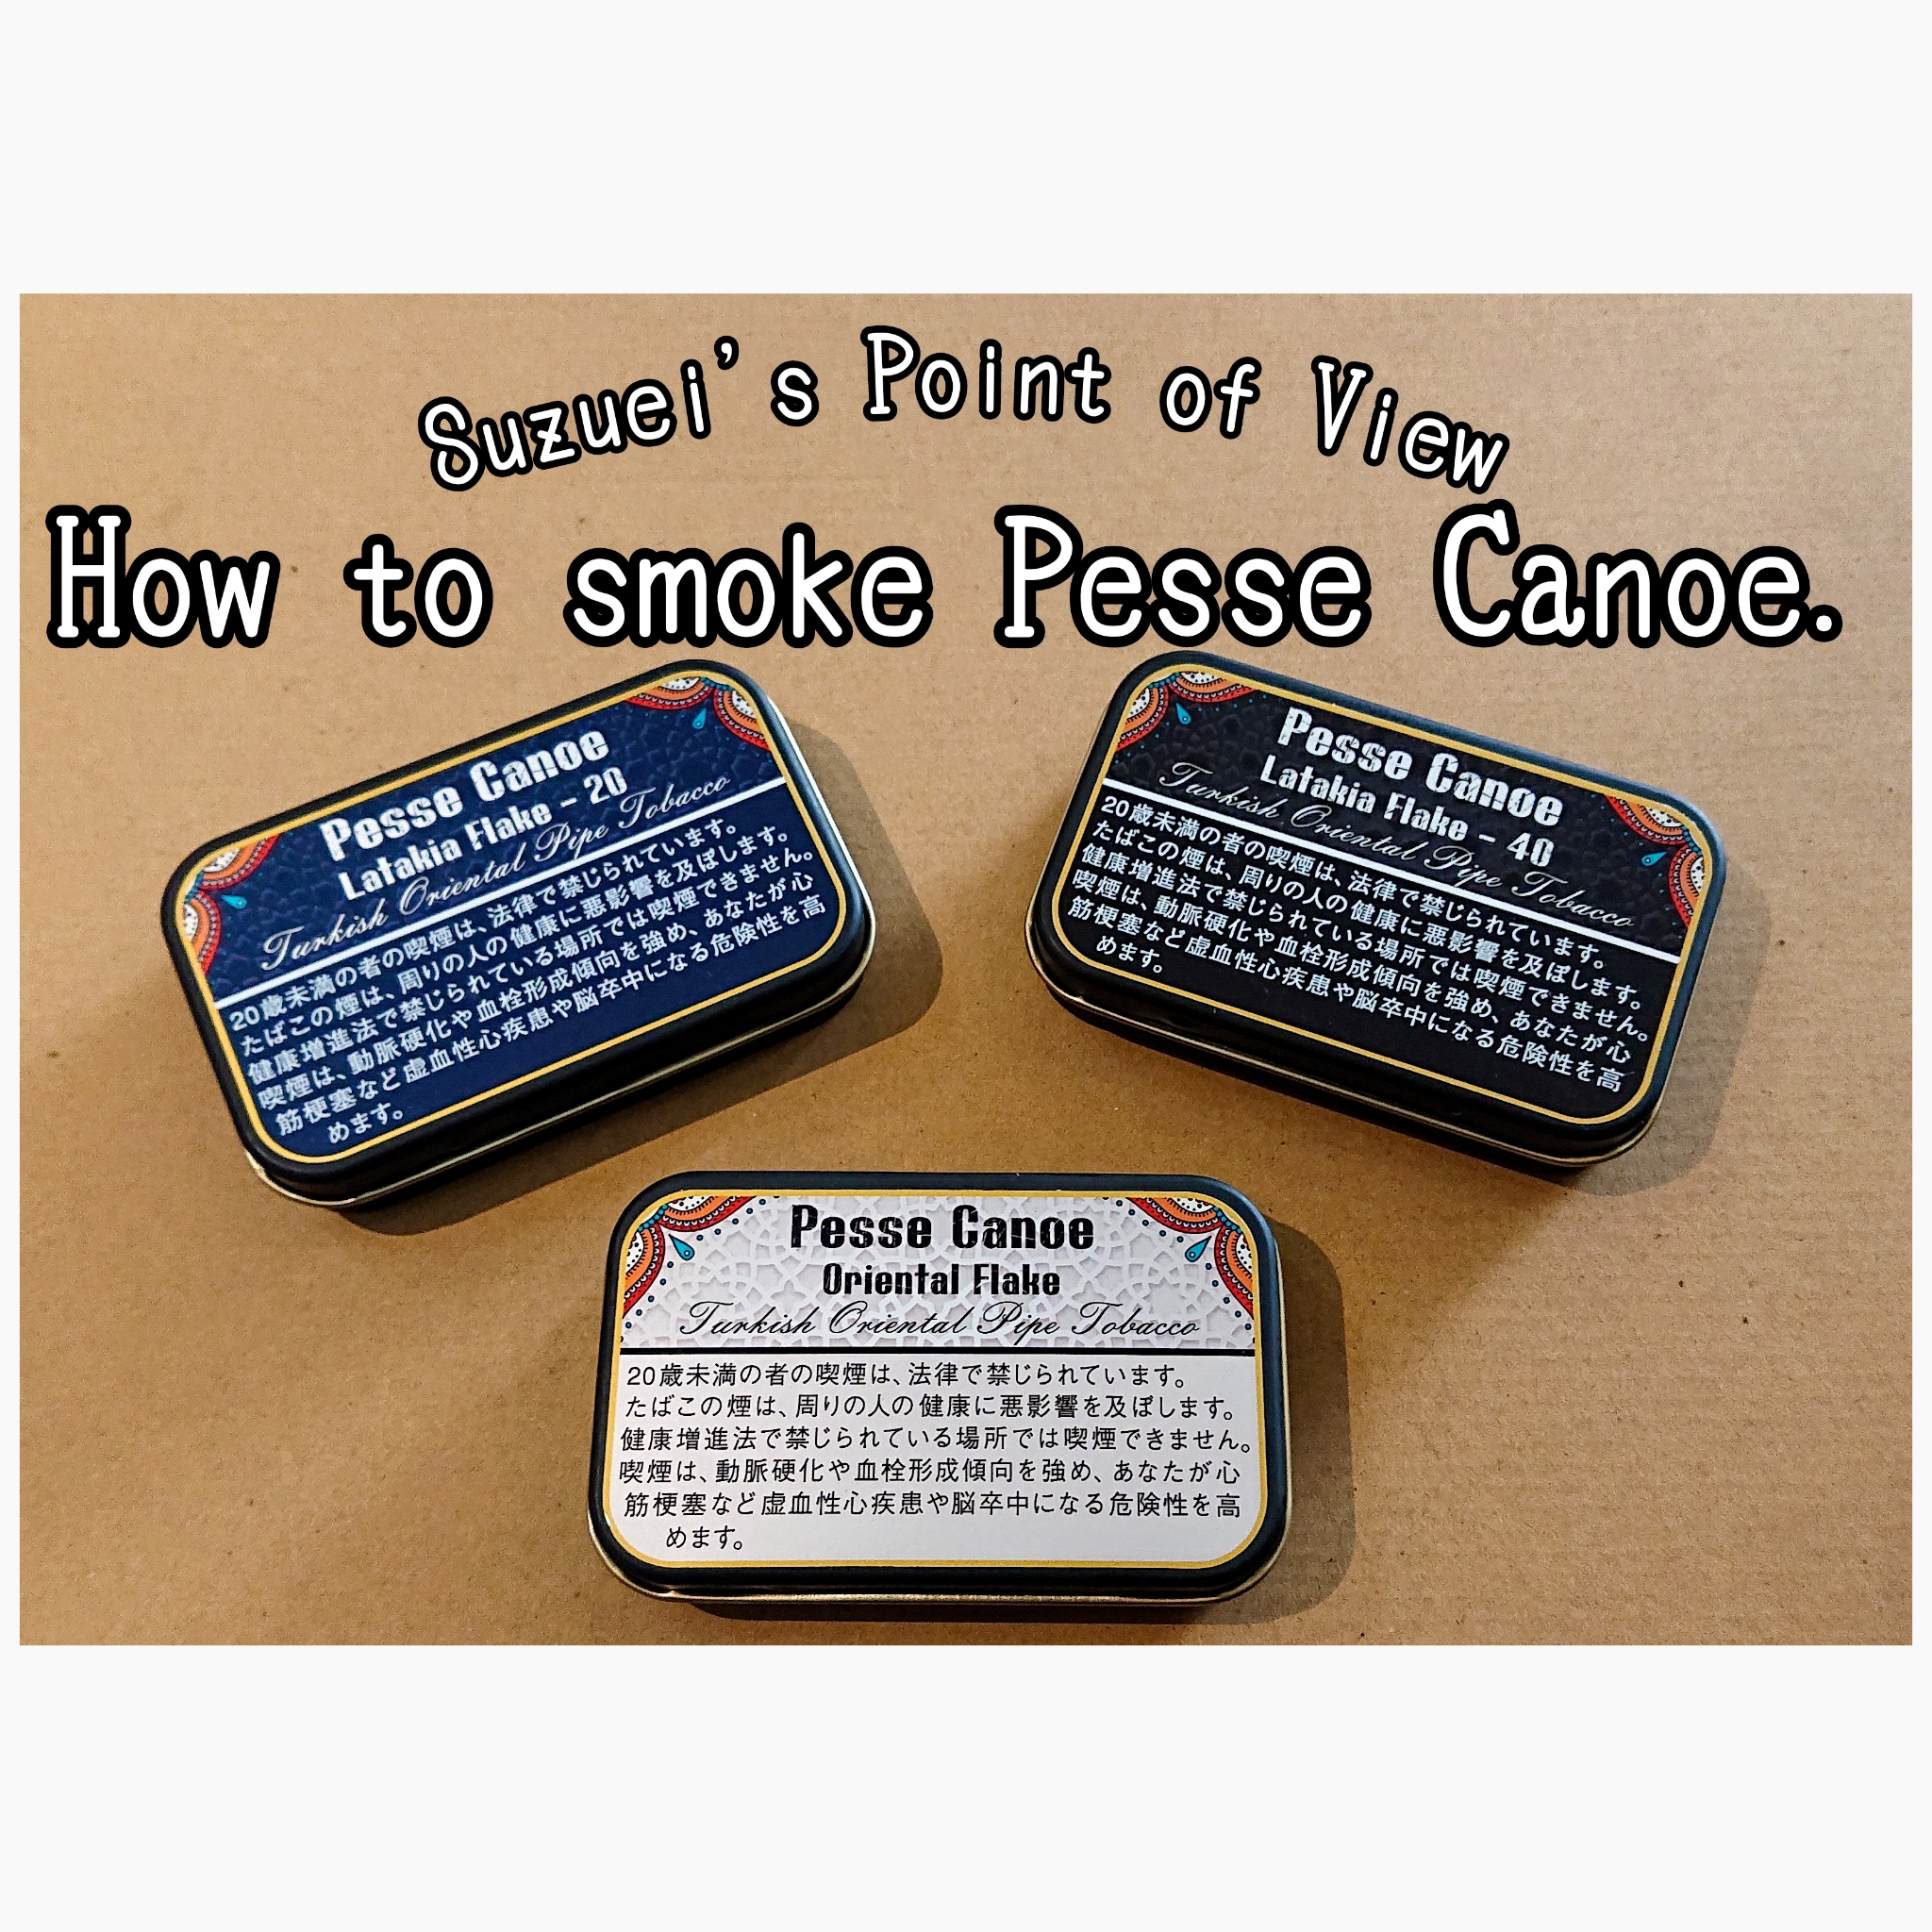 How to smoke Pesse Canoe. Suzuei's Point of View.